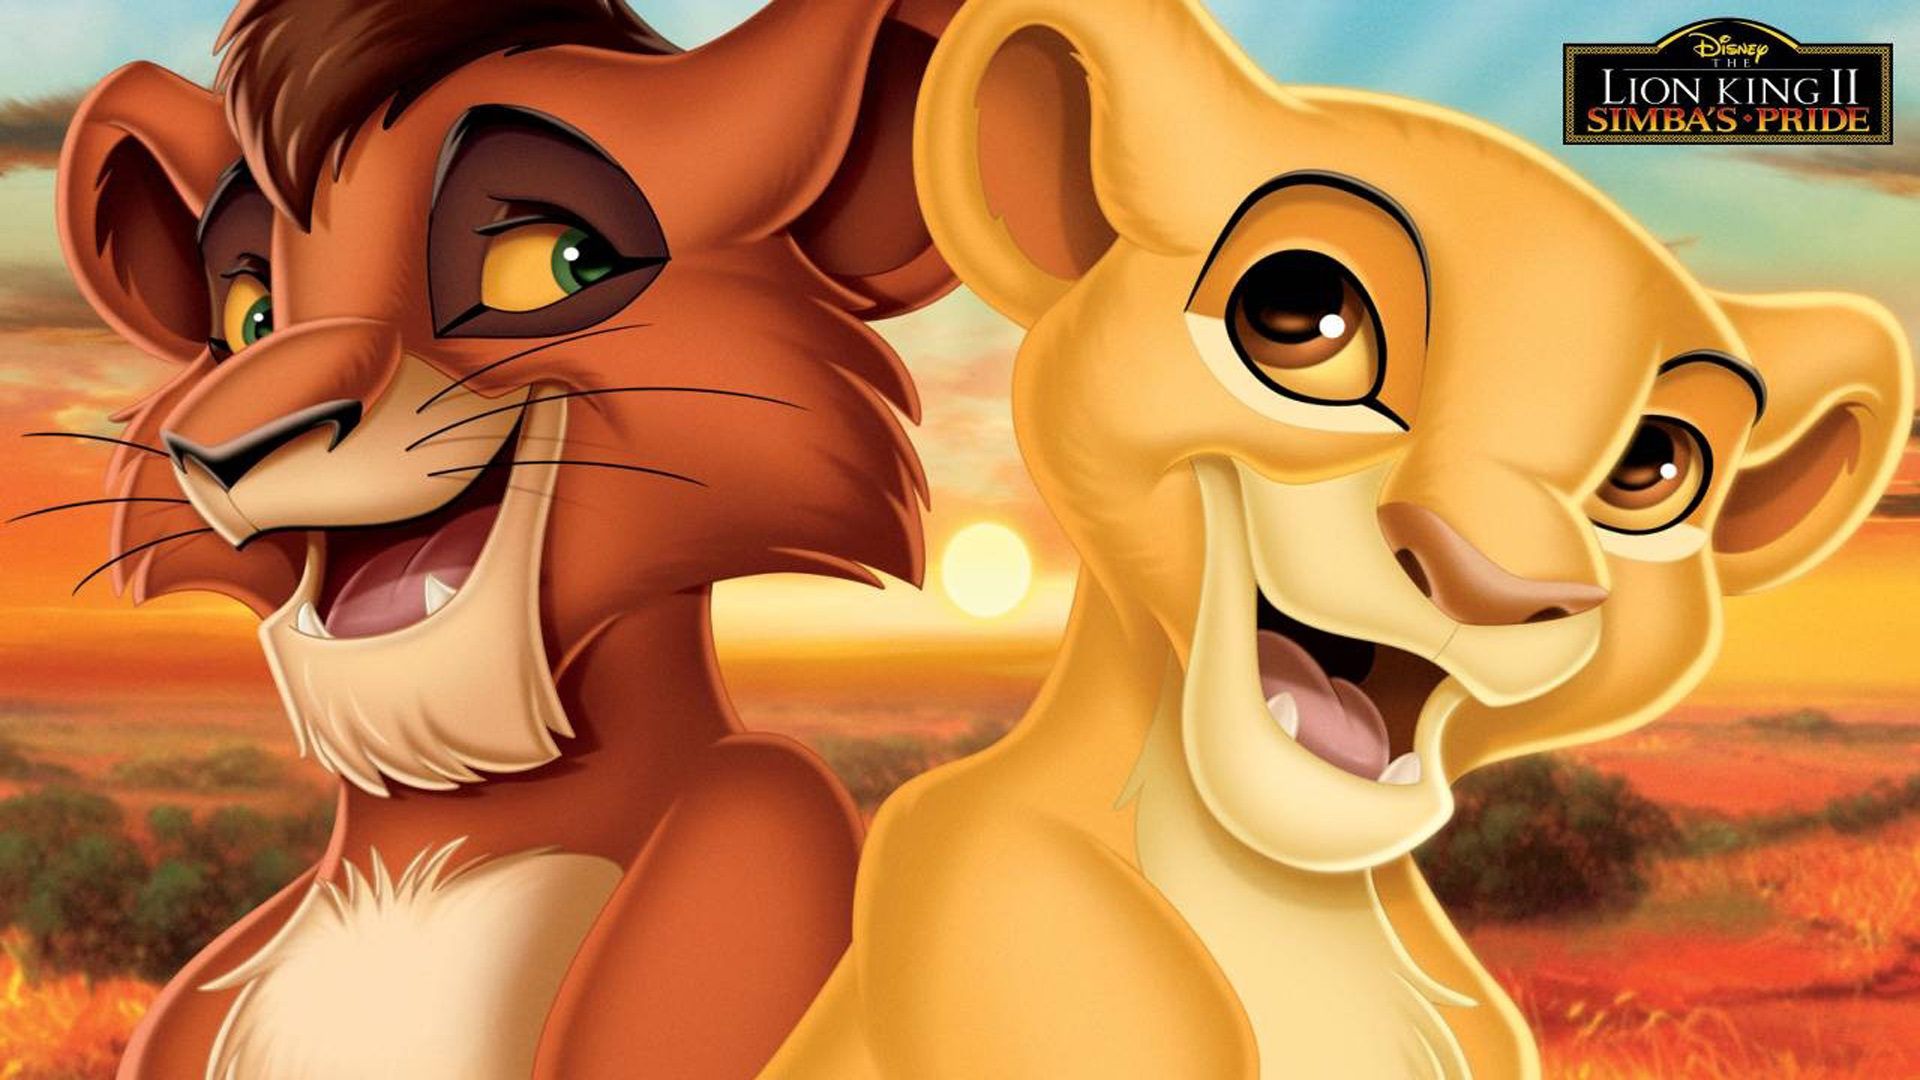 The Lion King 2 Simba's Pride Kiara And Kovu Disney Wallpaper HD 1920x1080 : Wallpaper13.com